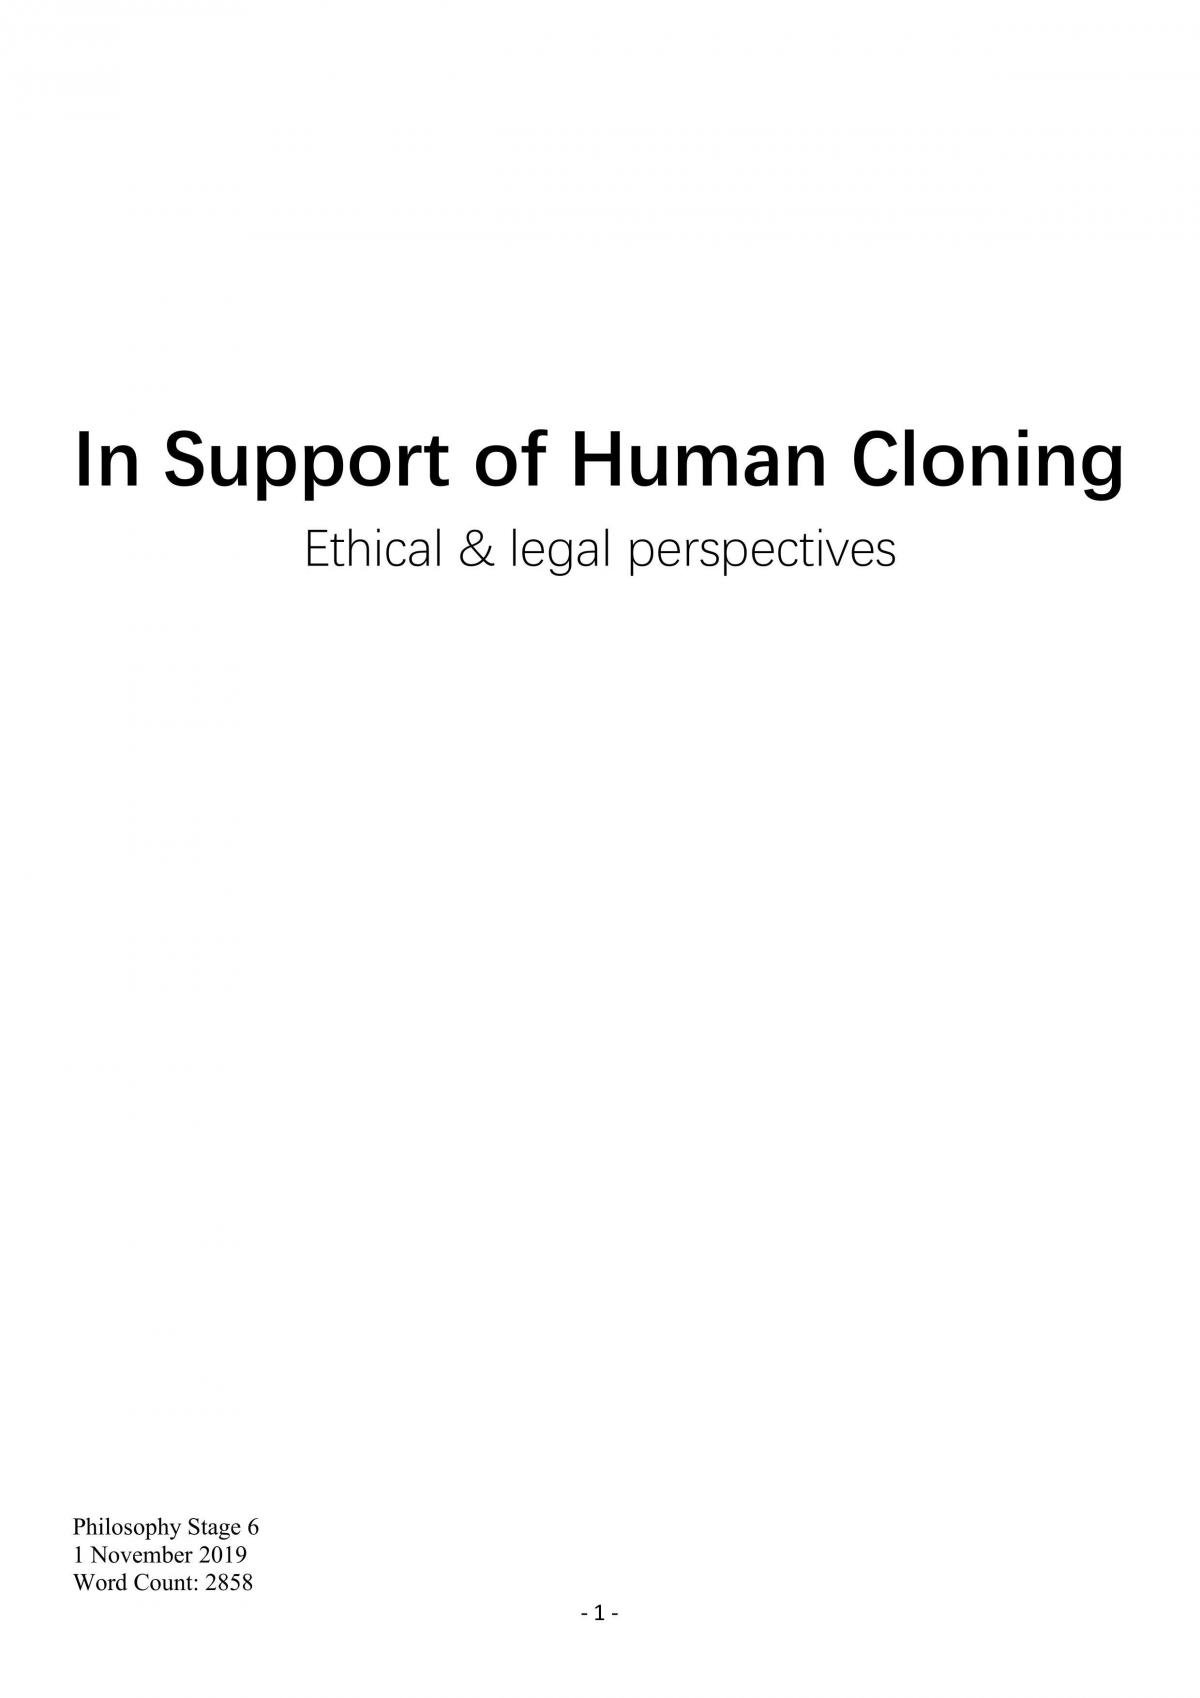 cloning benefits mankind essay